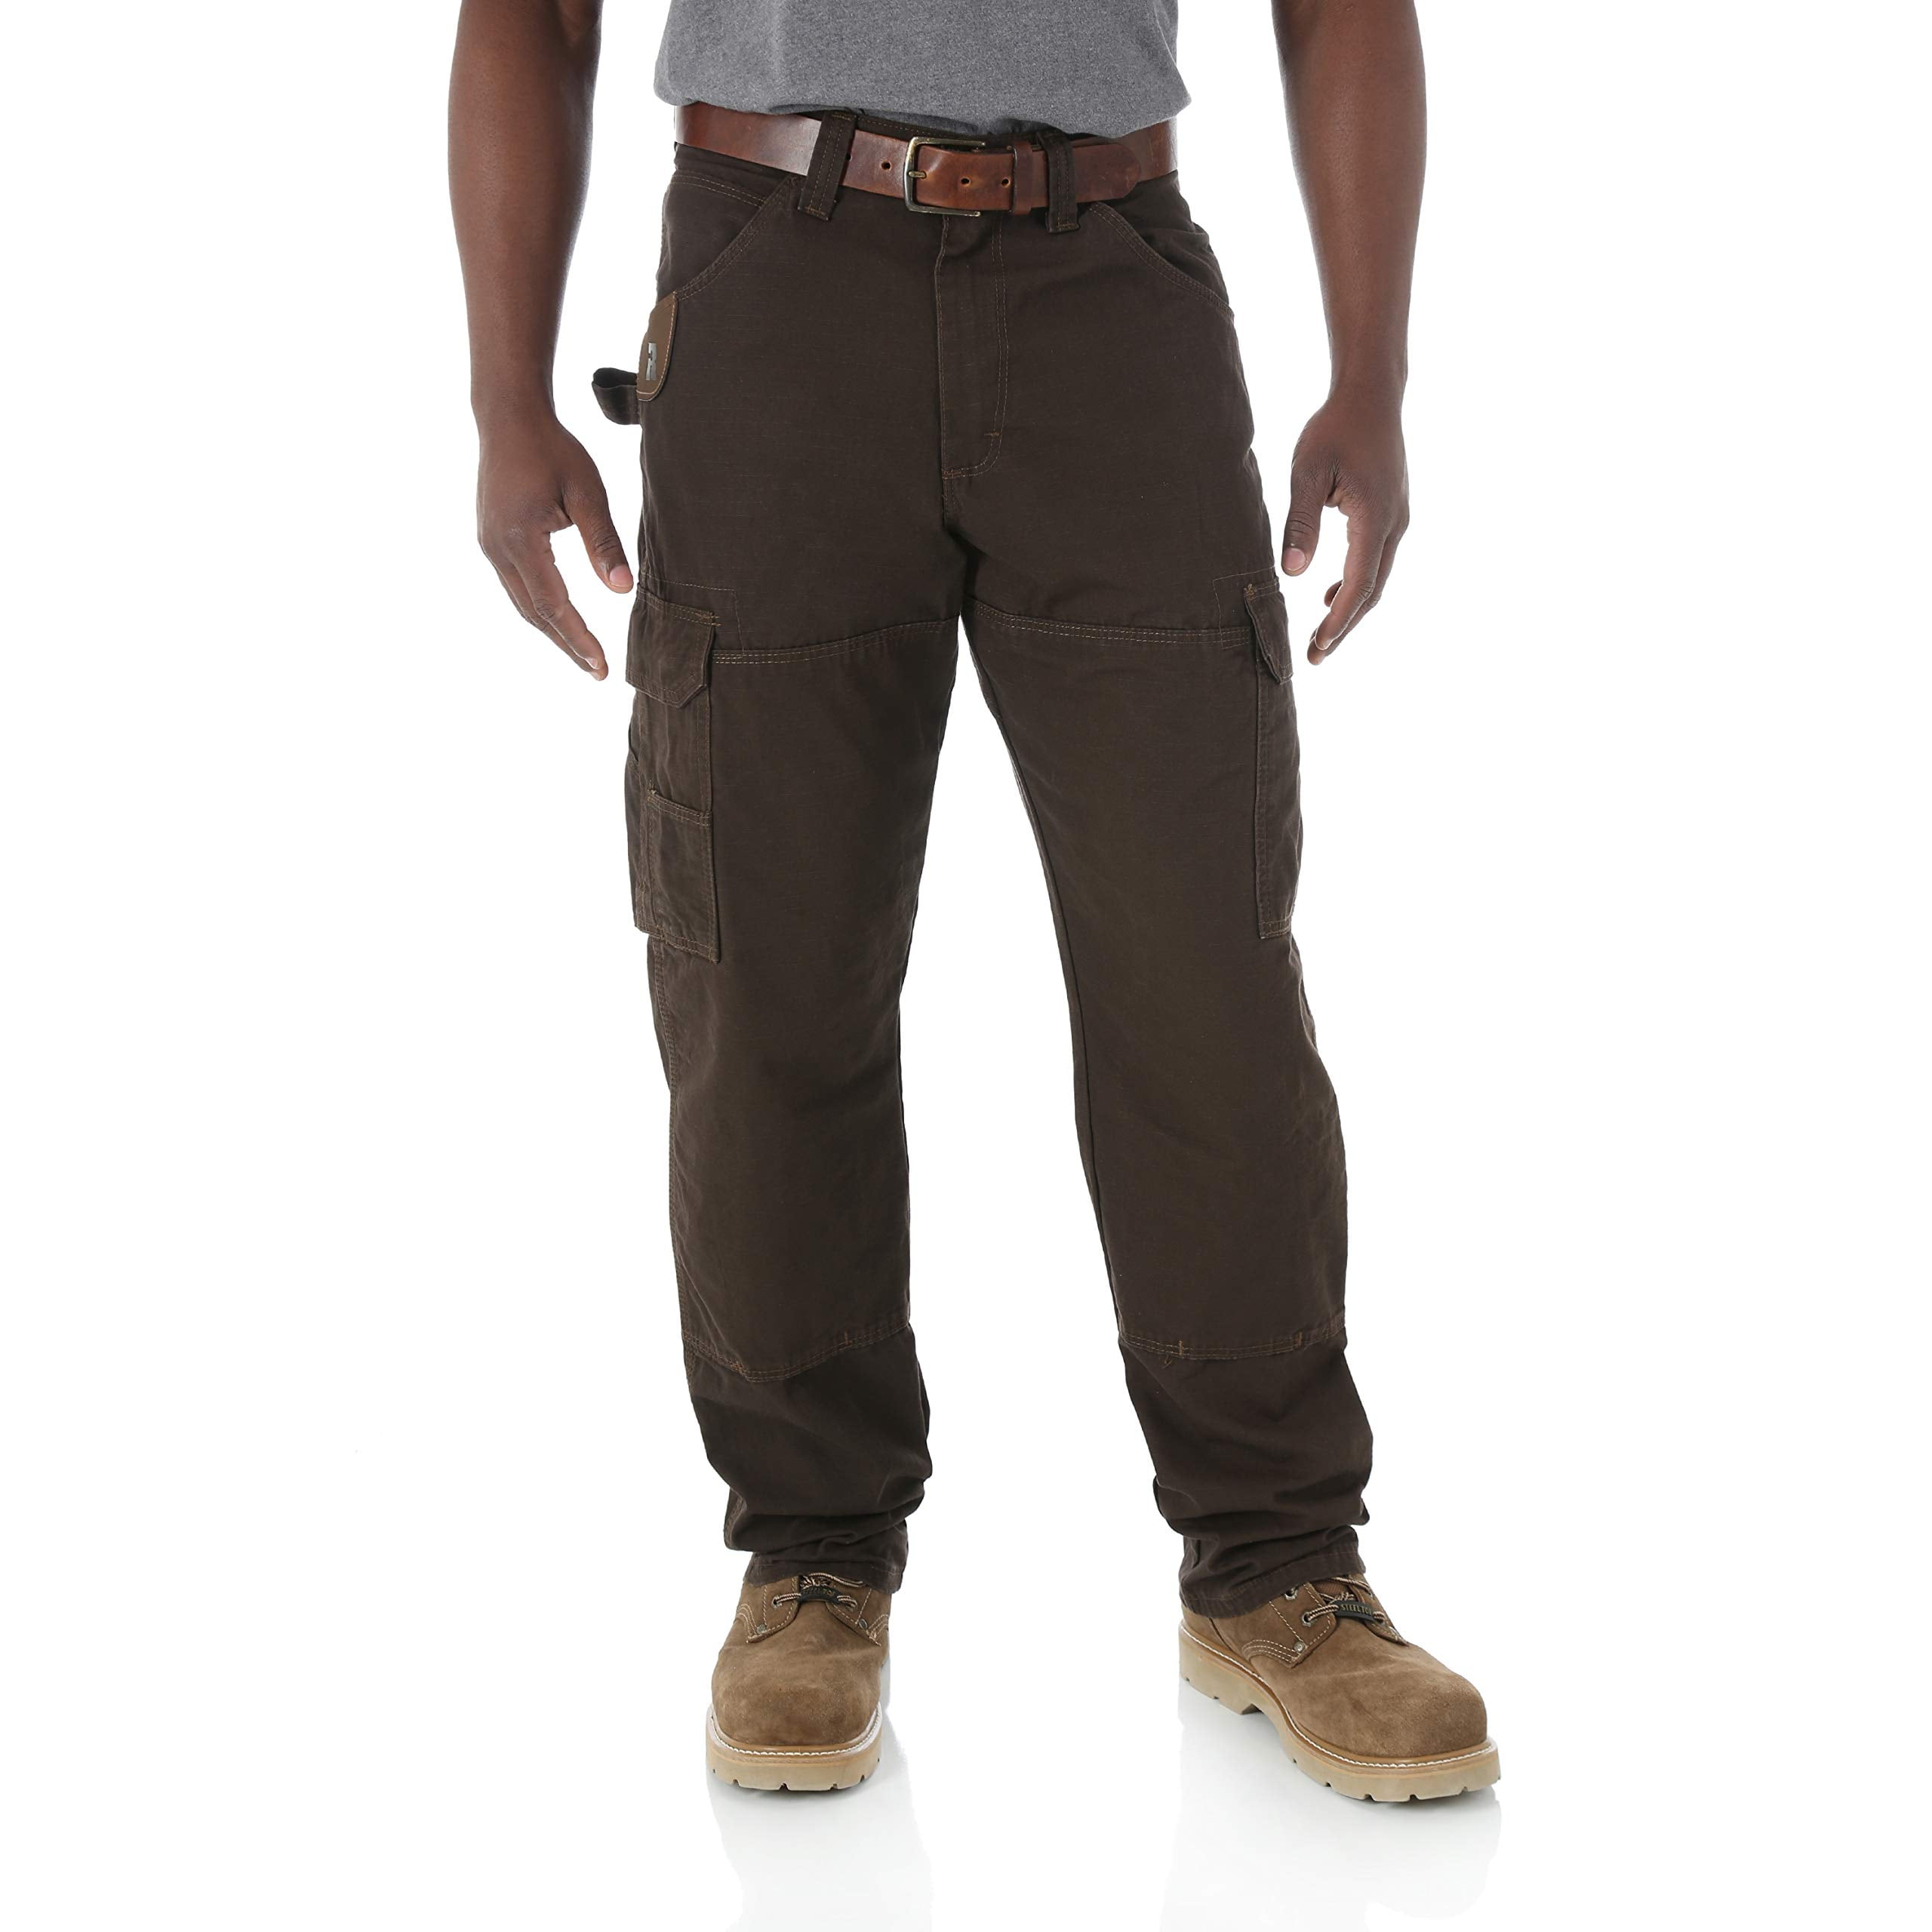 Riggs Workwear by Wrangler Ranger Pant - 3W060 - Dark Brown - 50x32